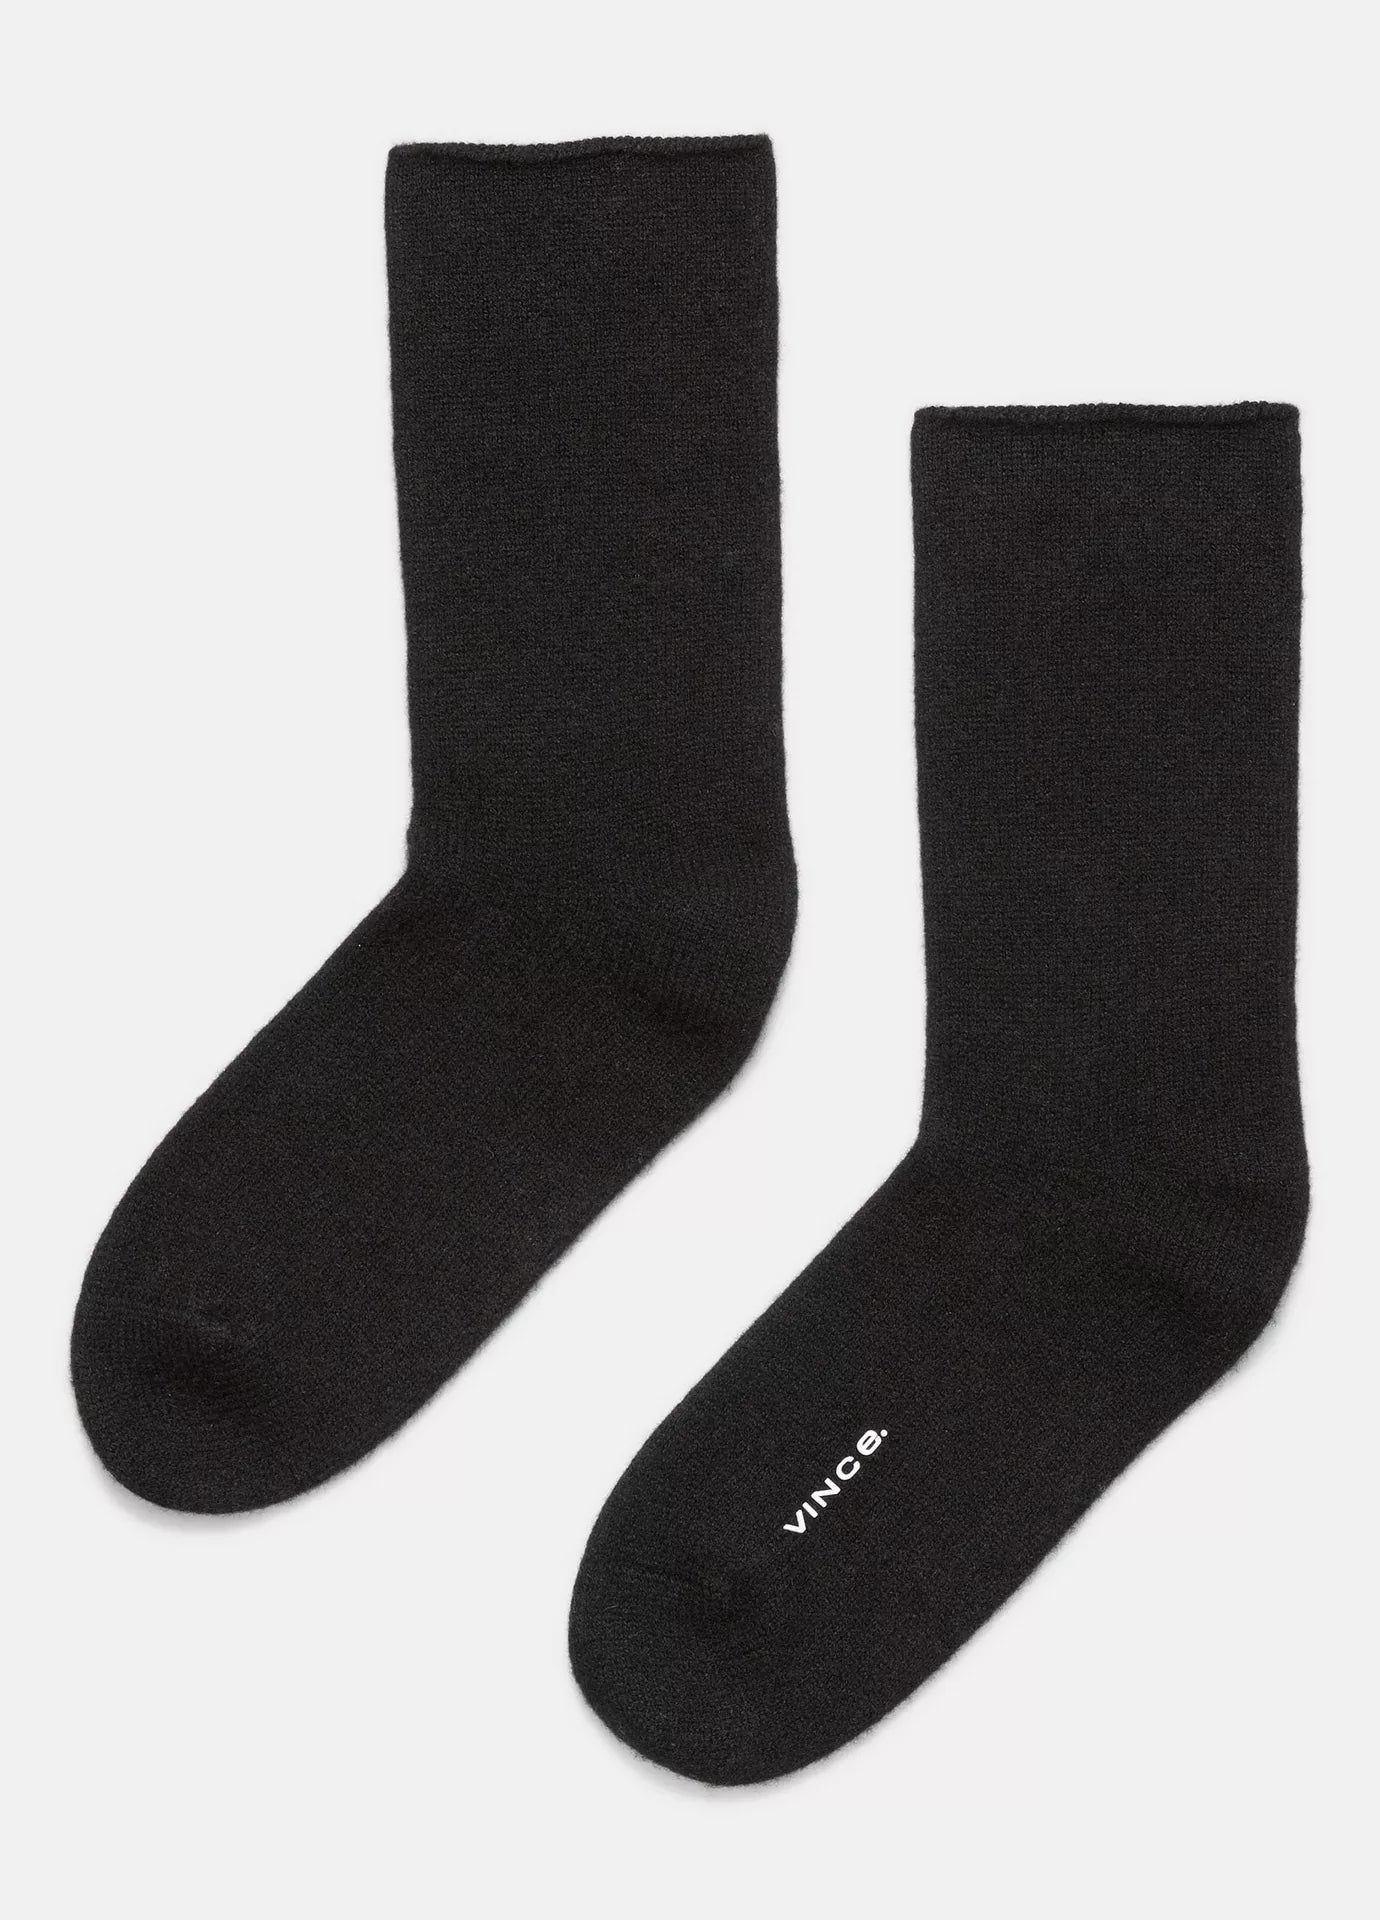 Vince Cashmere Jersey Short Sock, cashmere socks, socks, women's accessories